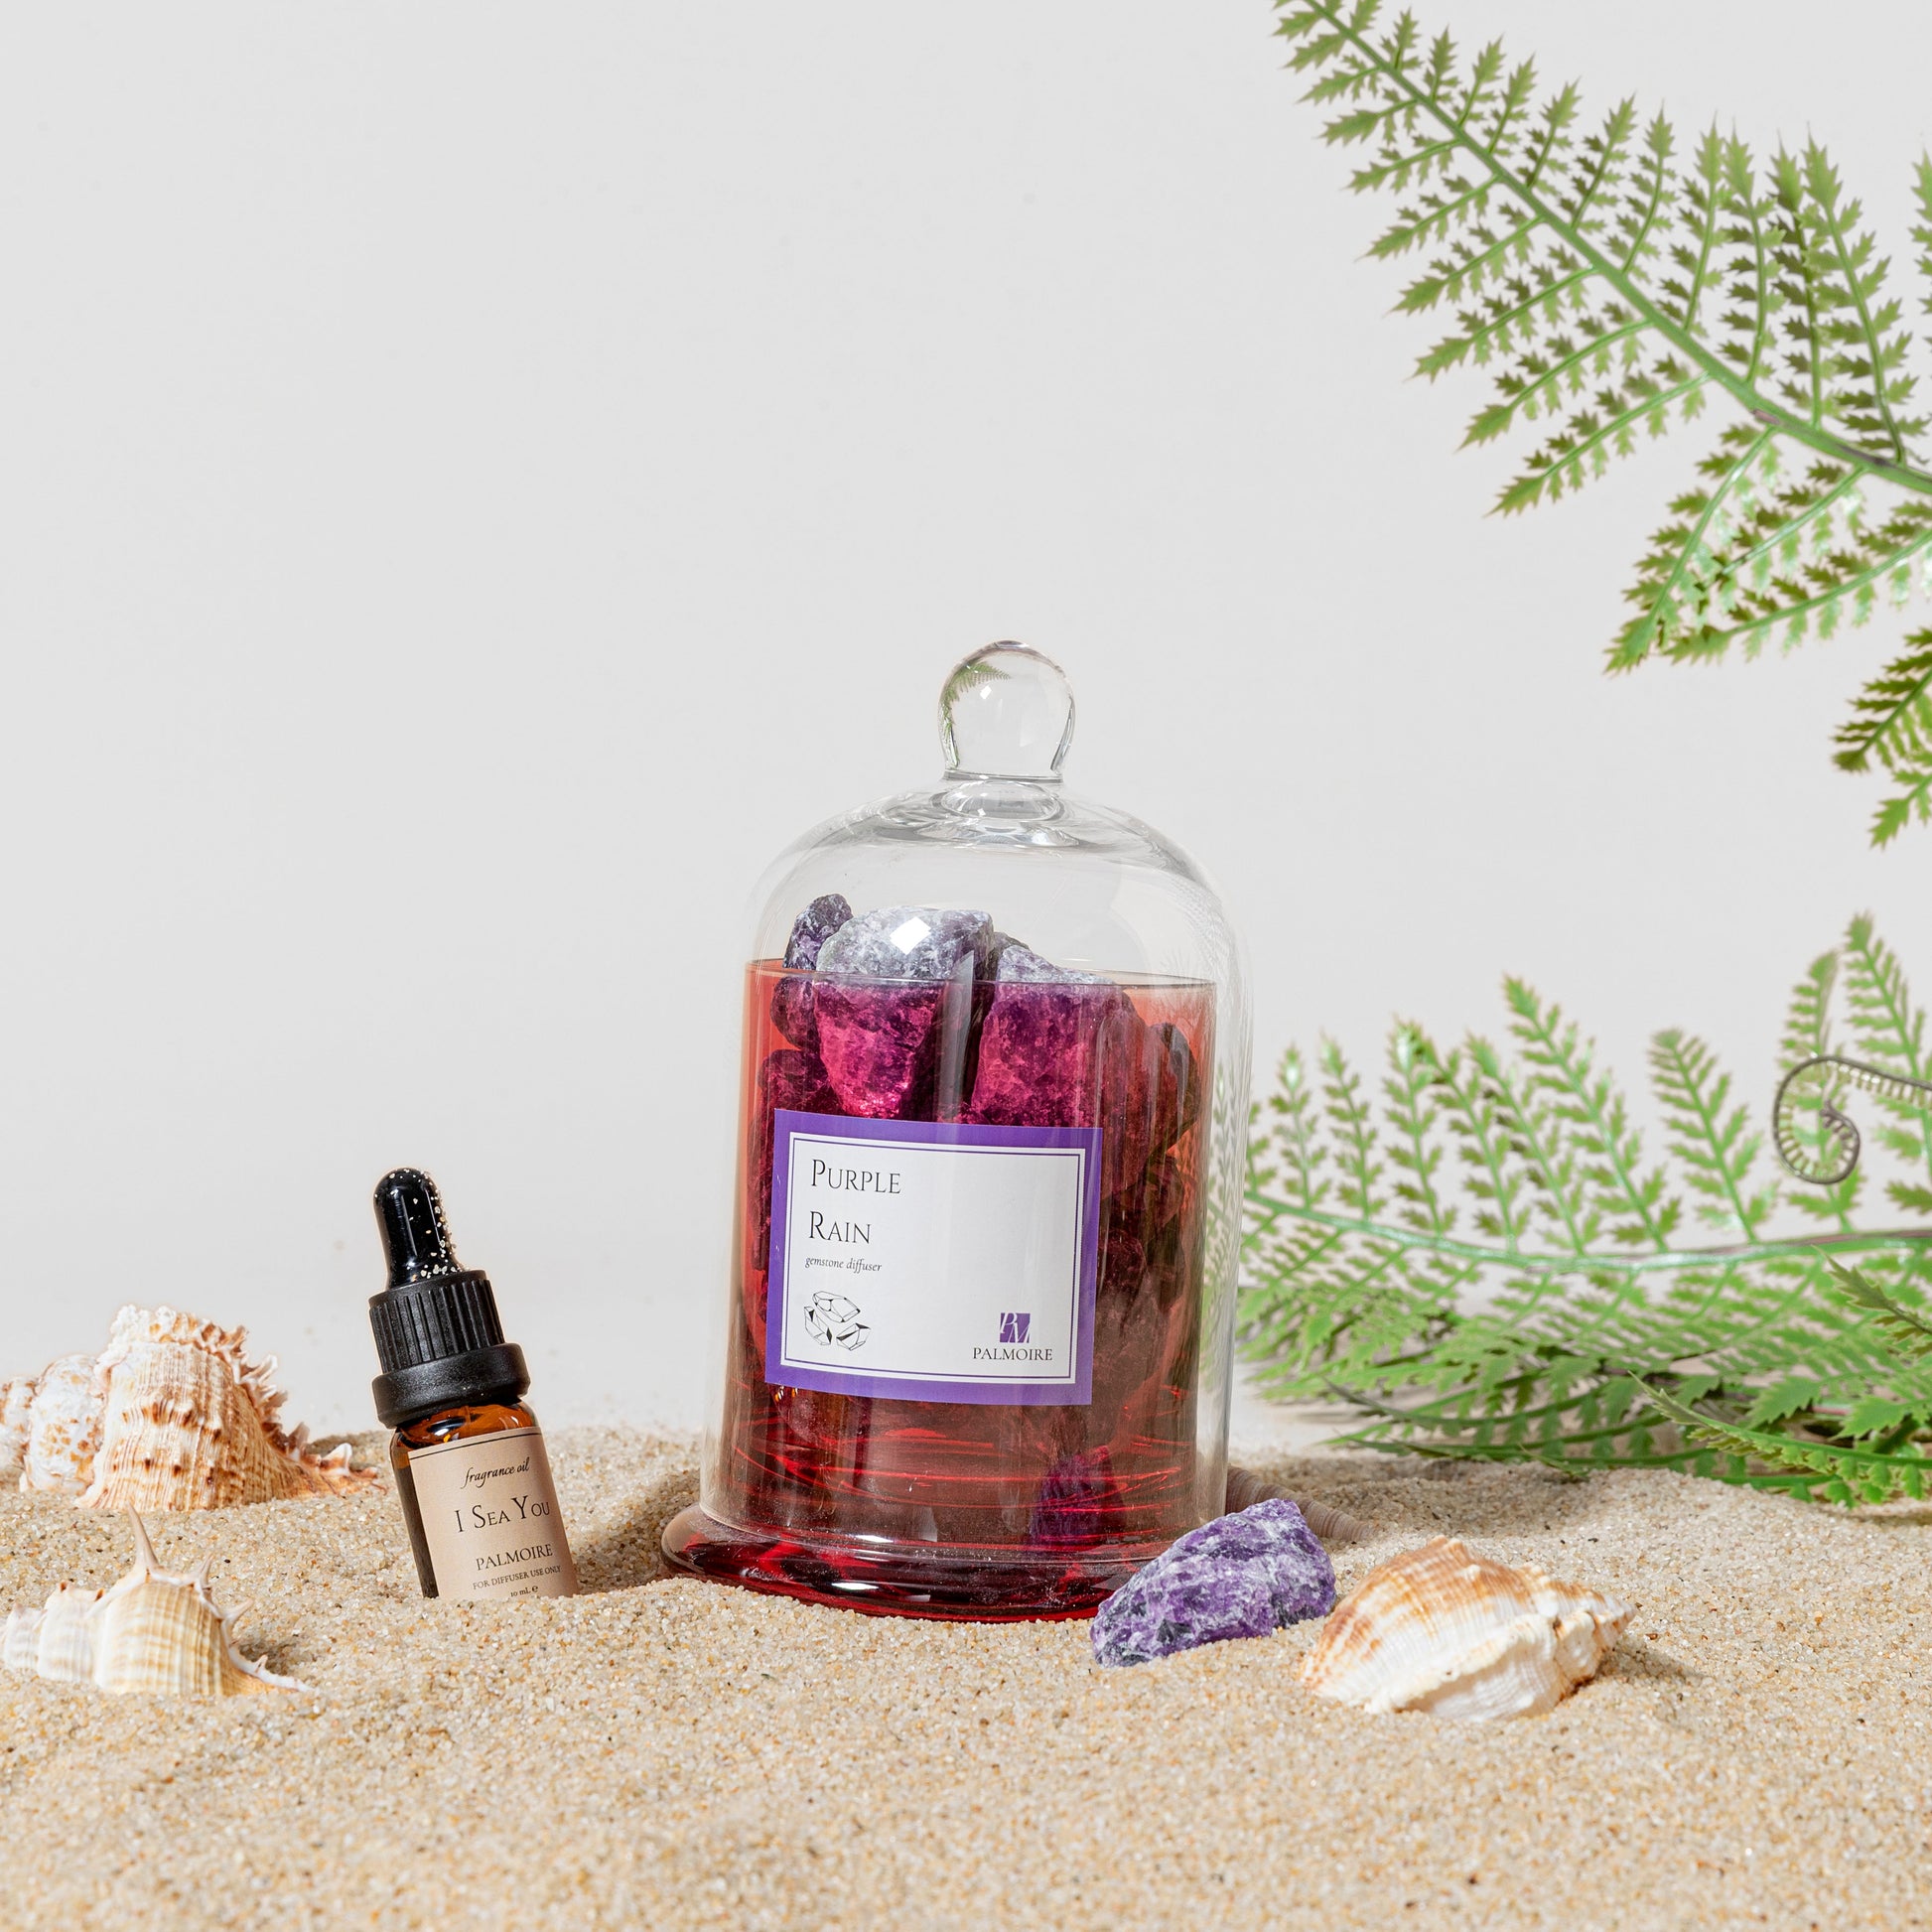 Purple Rain Gemstone Diffuser with I Sea You fragrance oil on a beach with sea shells